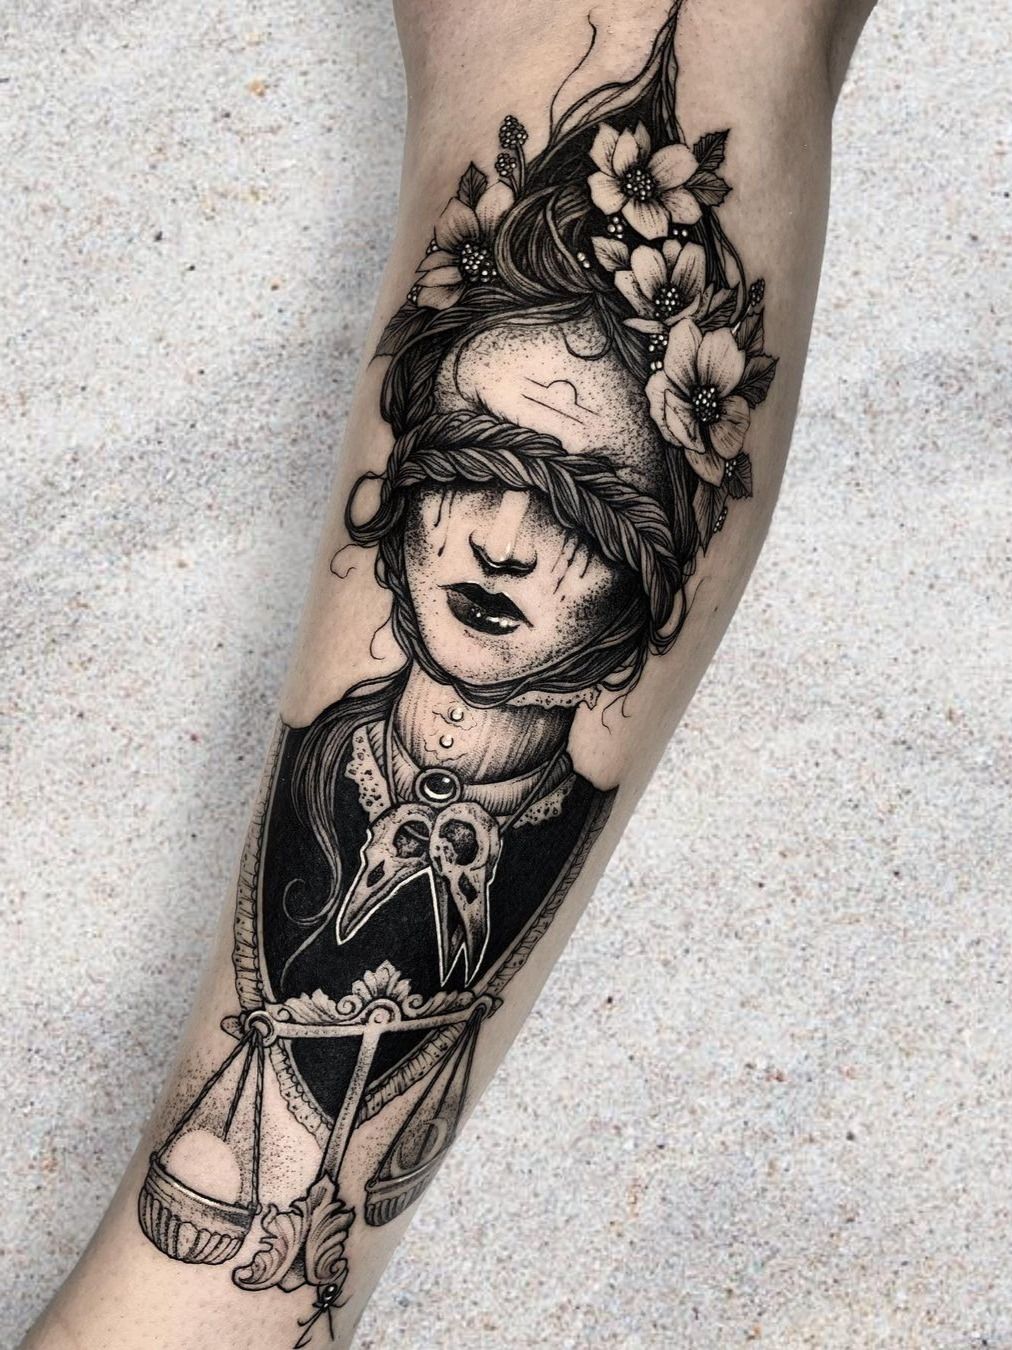 Tattoo by @gordotaub - Sydney/Australia : r/tattoo